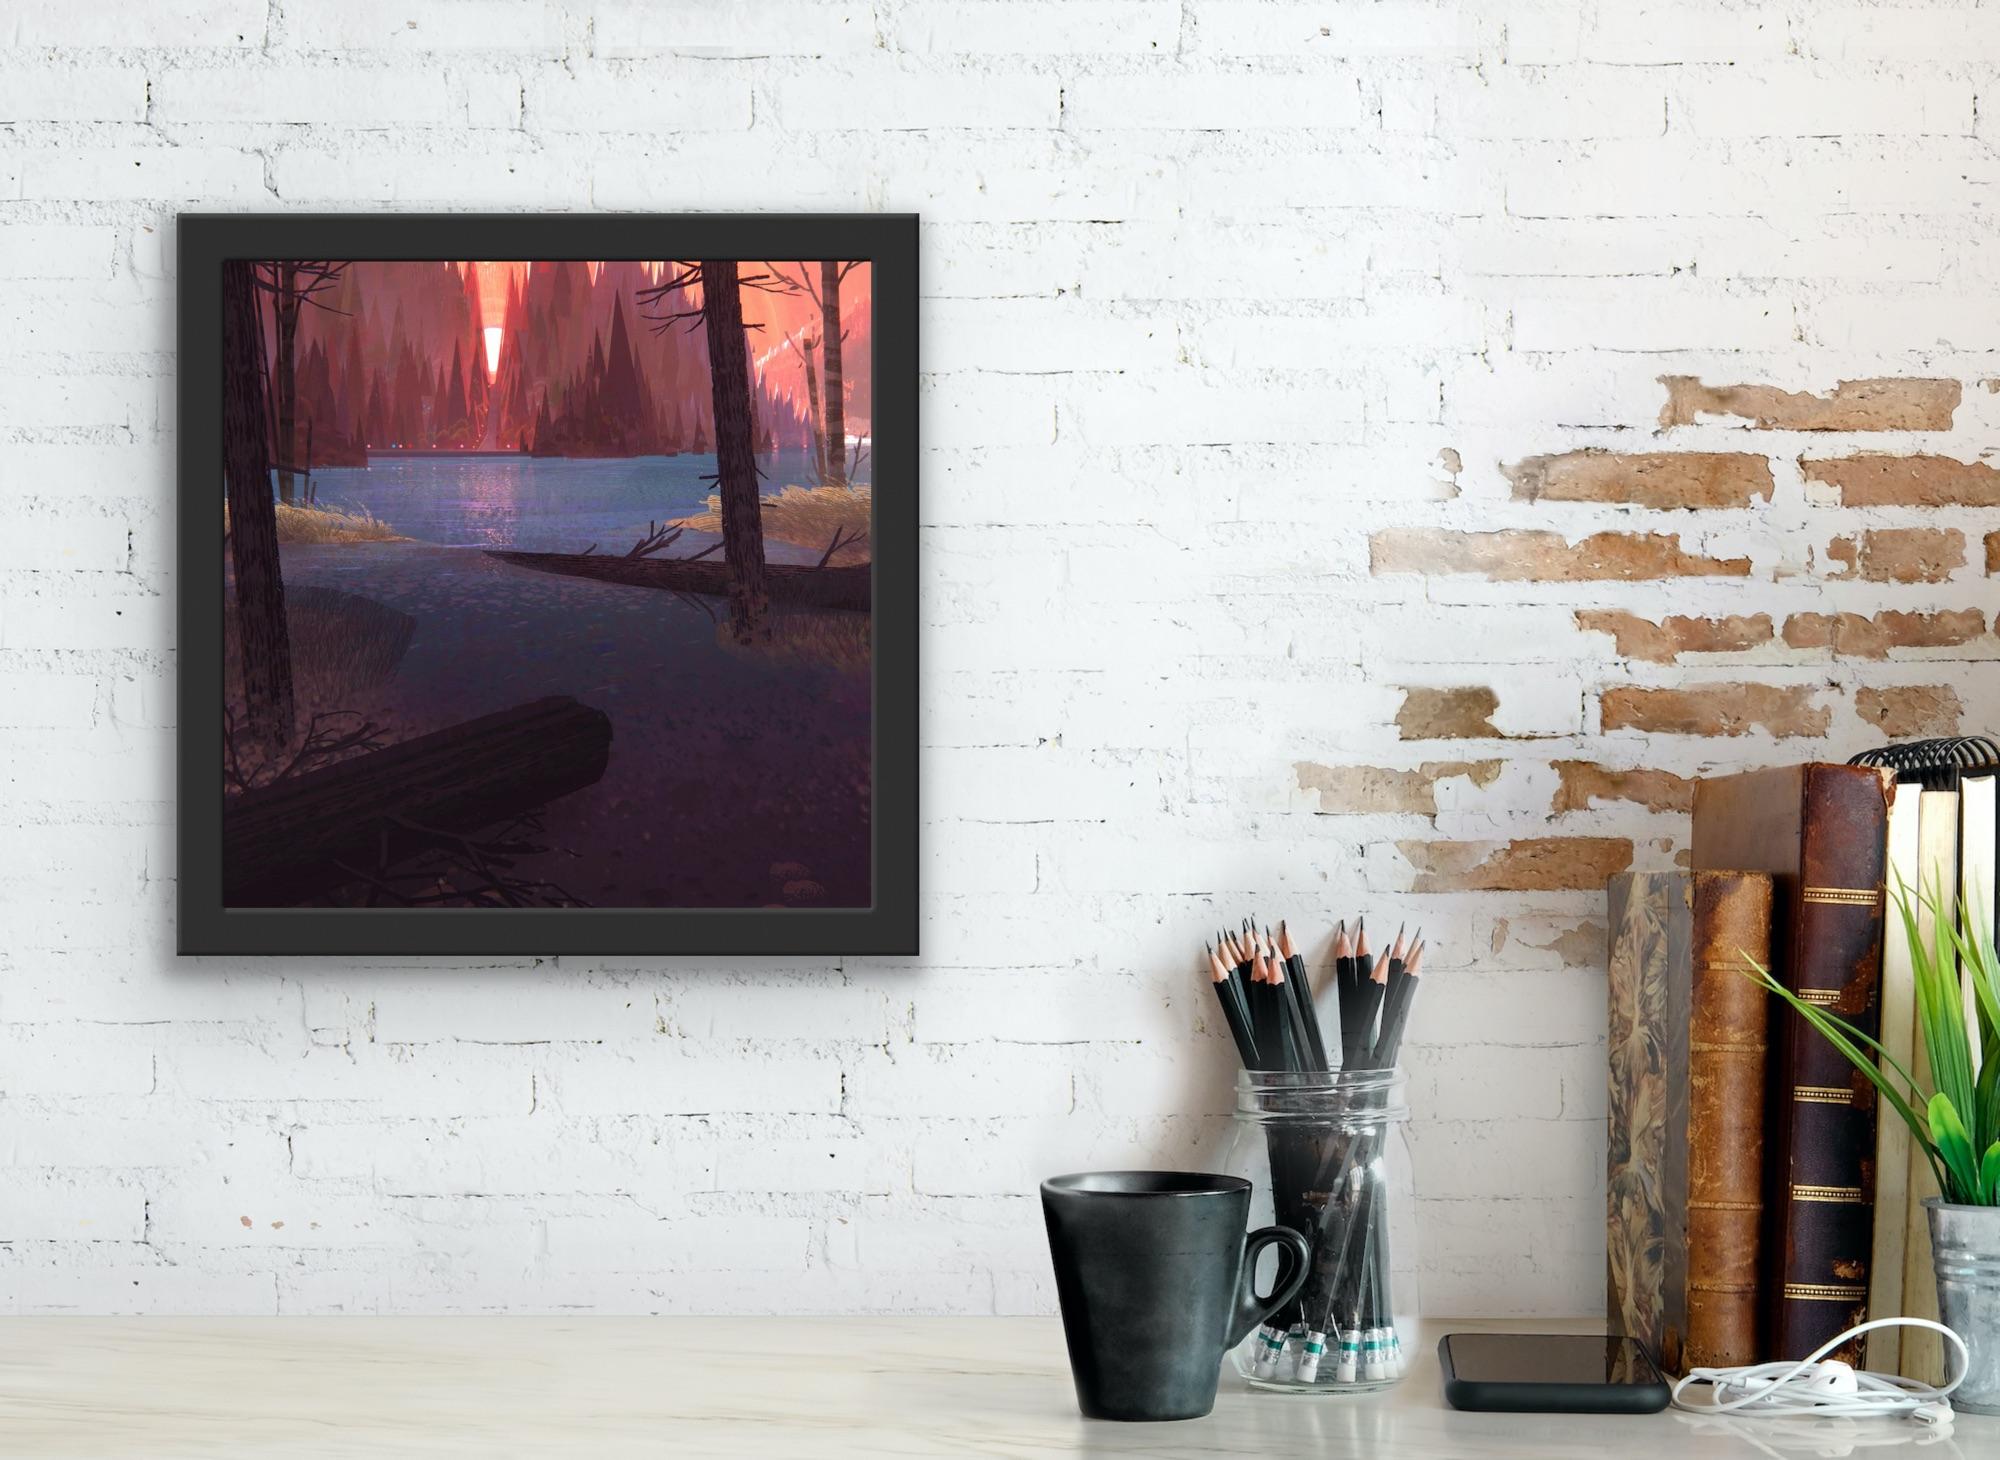  Jamie Williams Digital Creator 2D/3D Pinks Blues Trees Lake Magical Realism For Sale 5